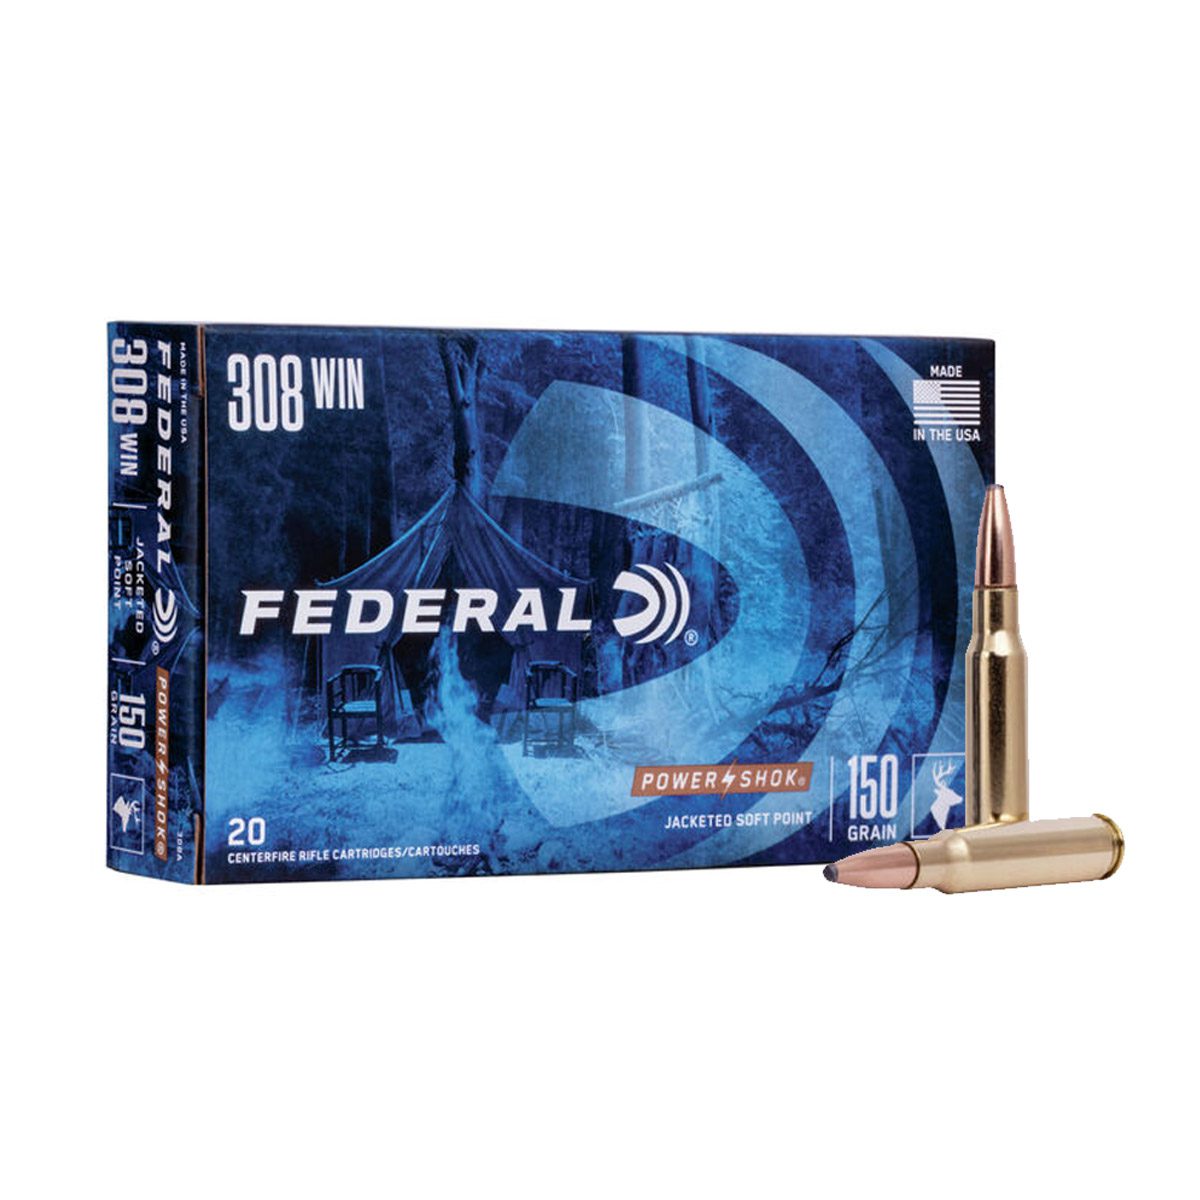 Federal Power Shok 308 Win. 150 gr. – 20 Rounds